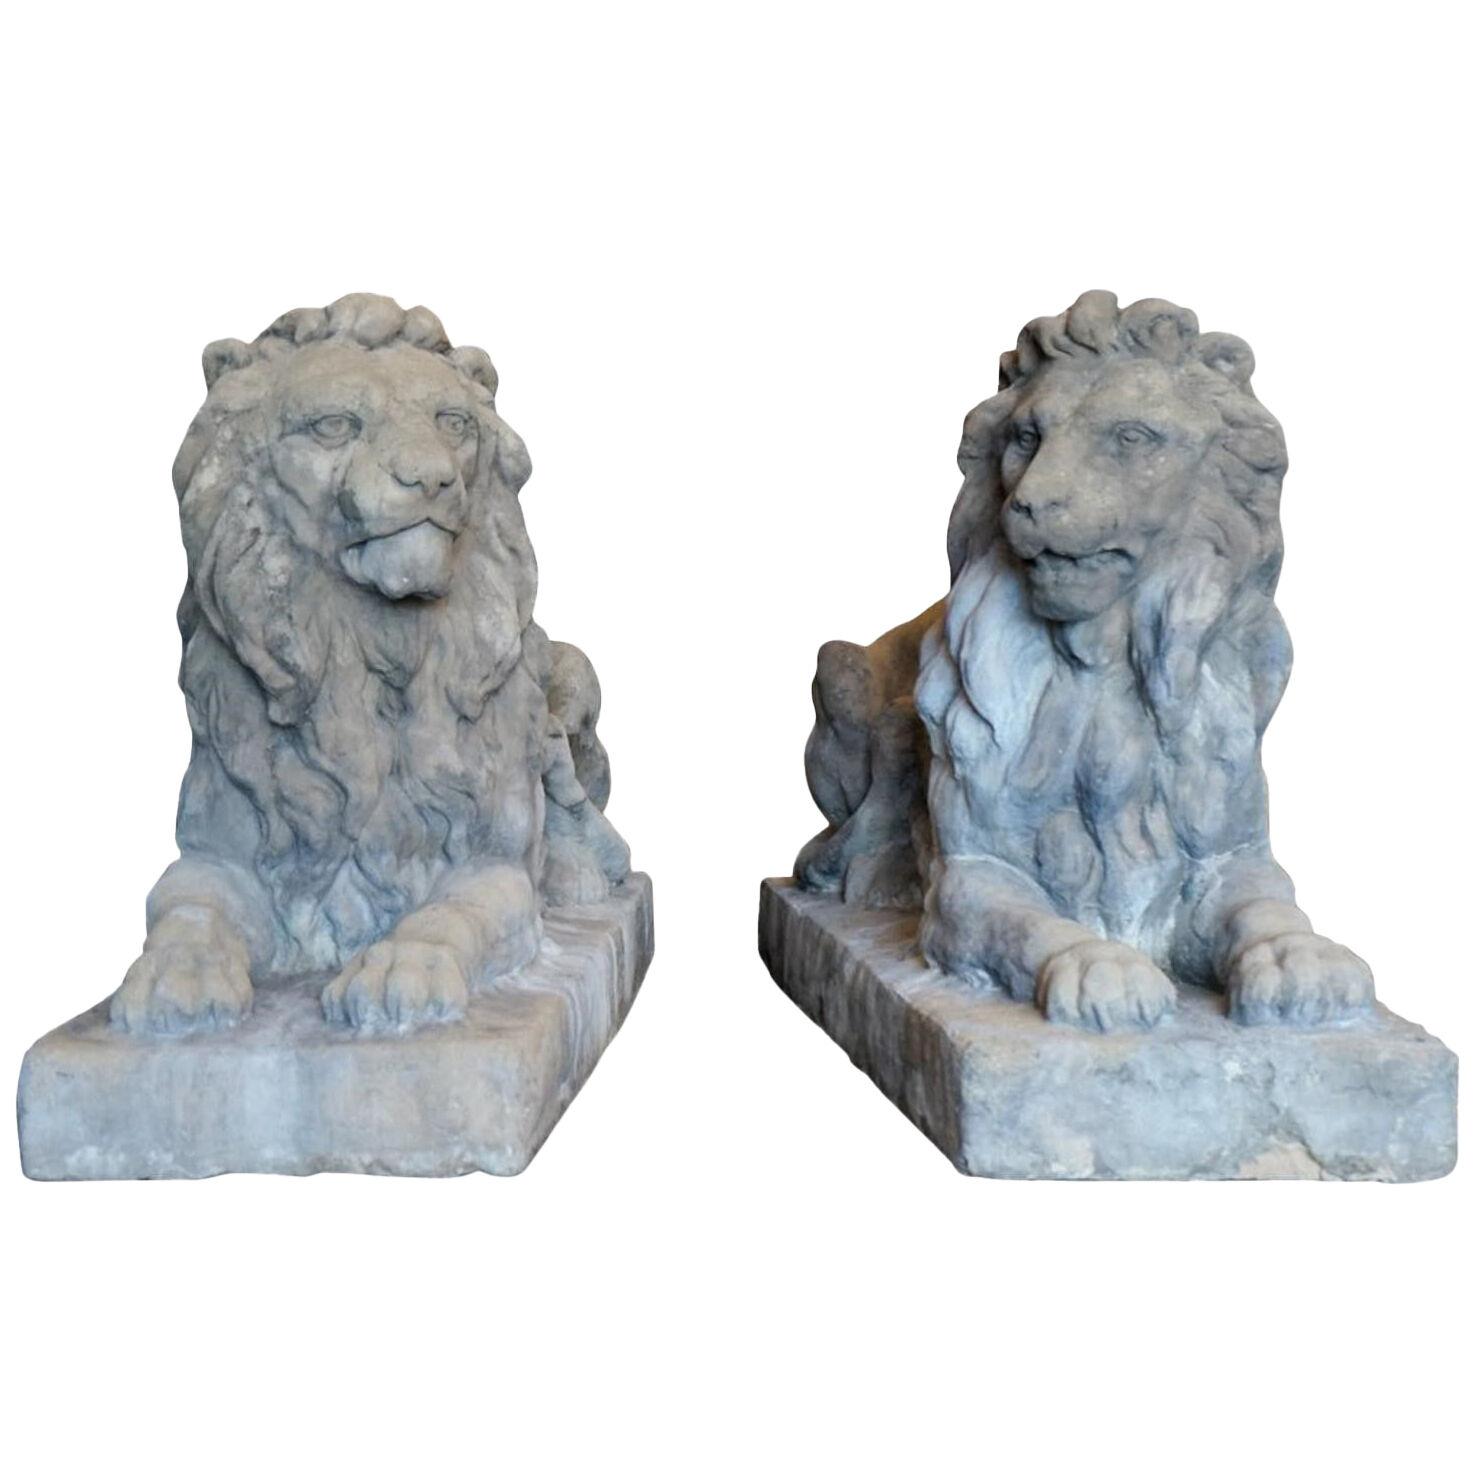 18th Century Limestone Lions - A Pair